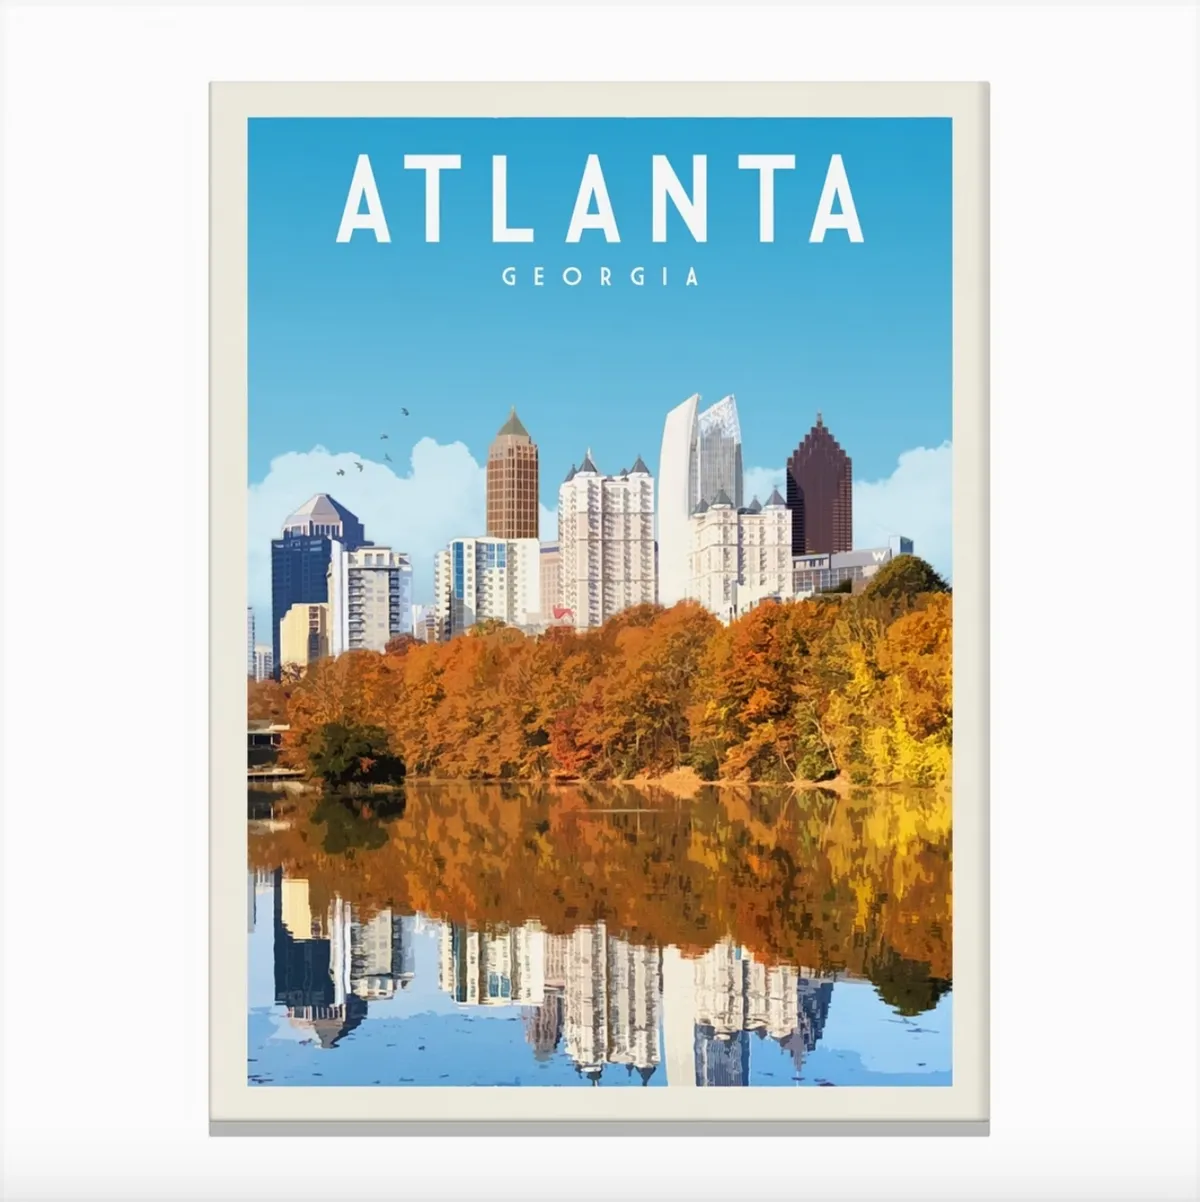 Vintaprints Atlanta Georgia Travel Poster, Fy!